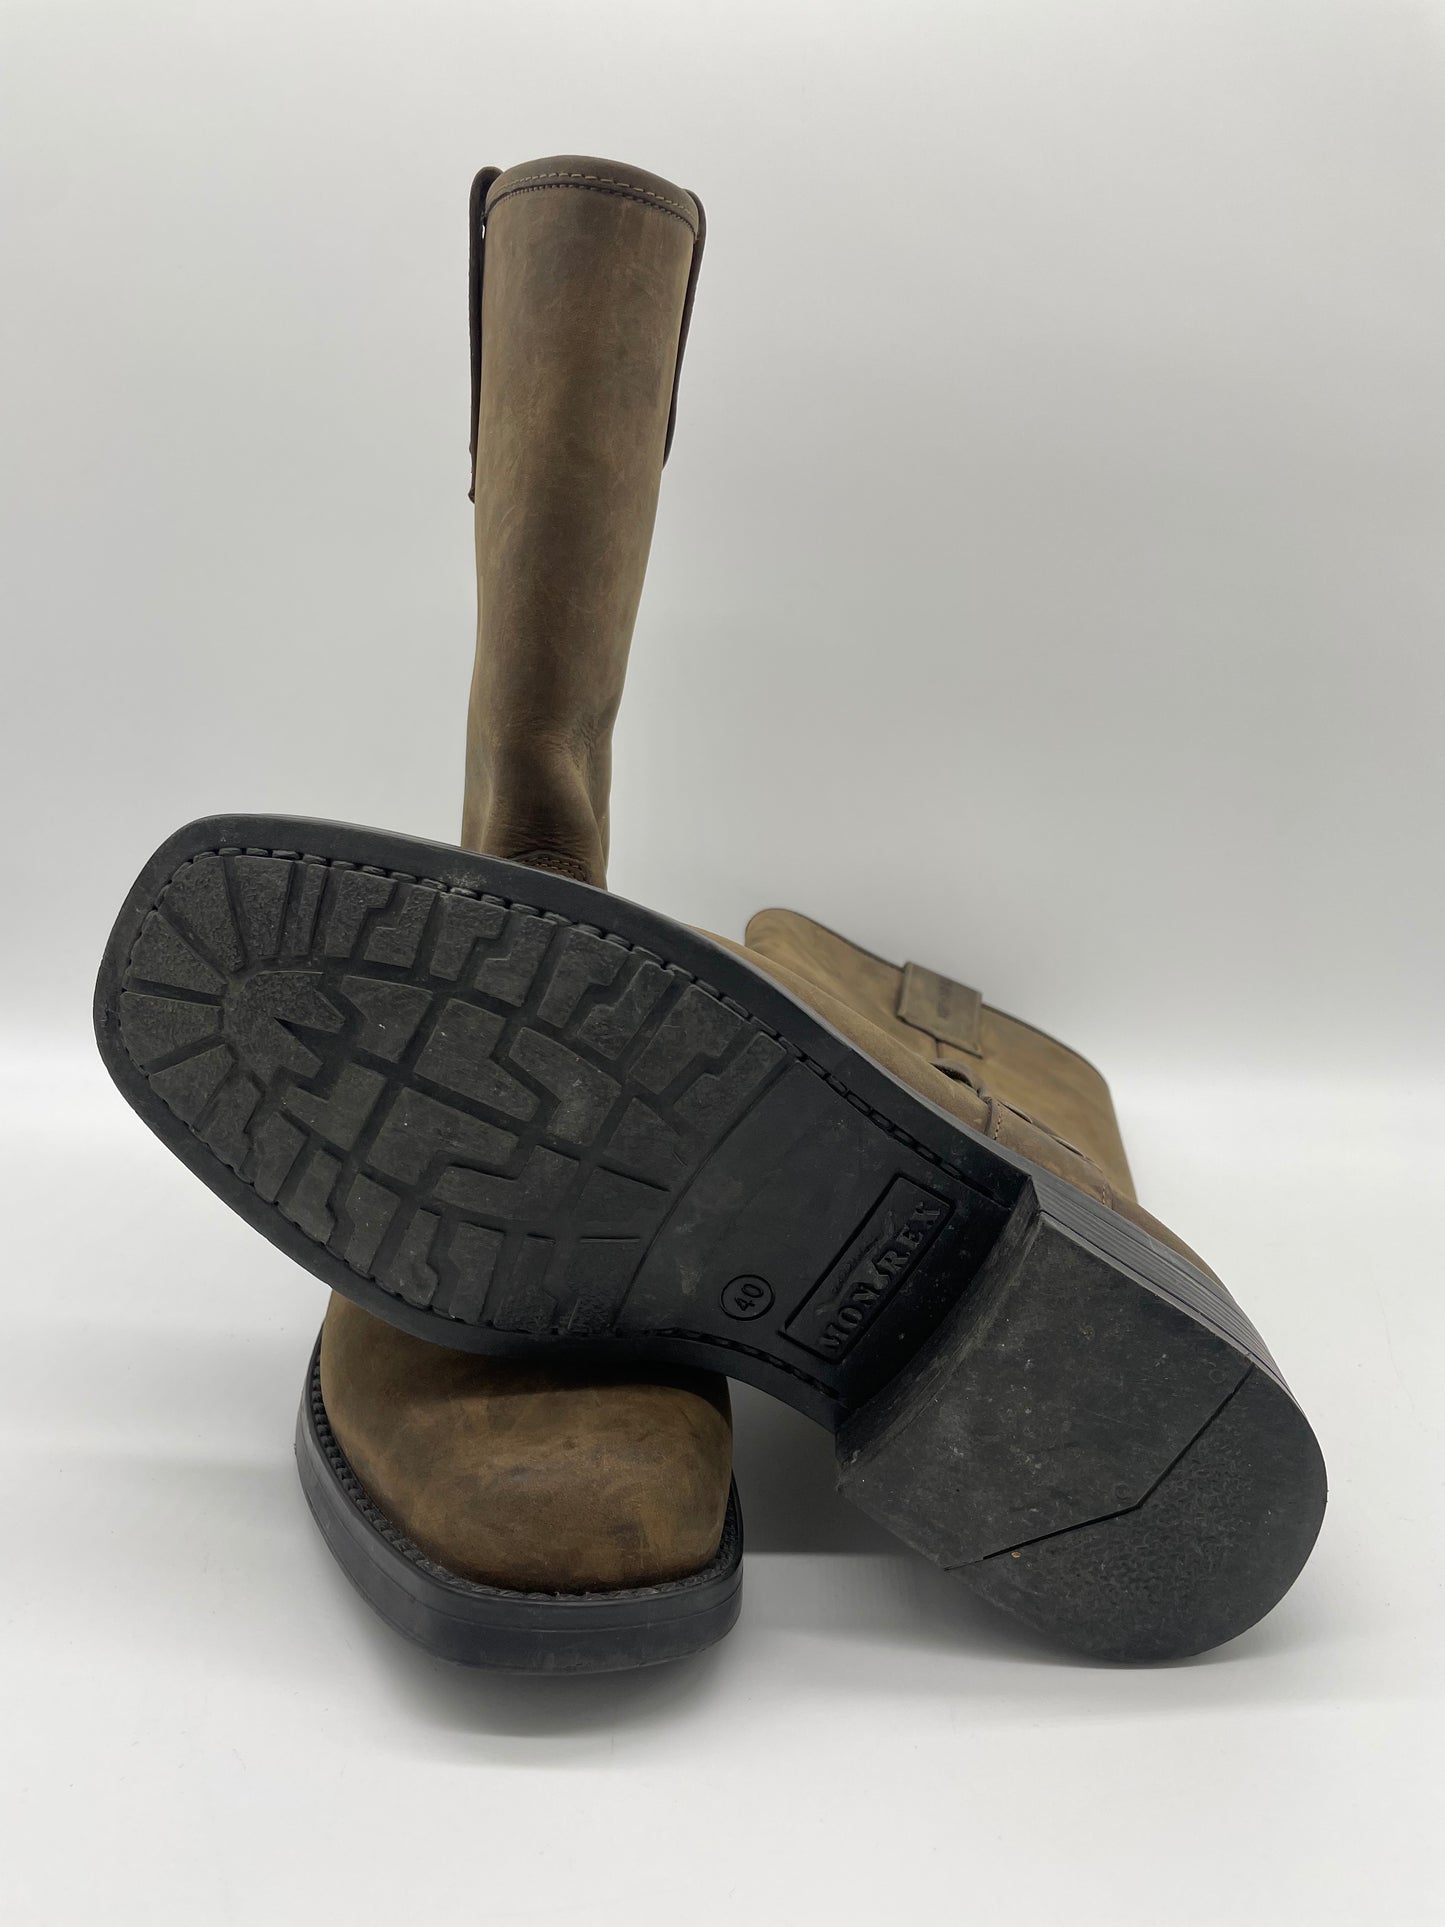 Montrex leather Boots 1990 - Numero 40